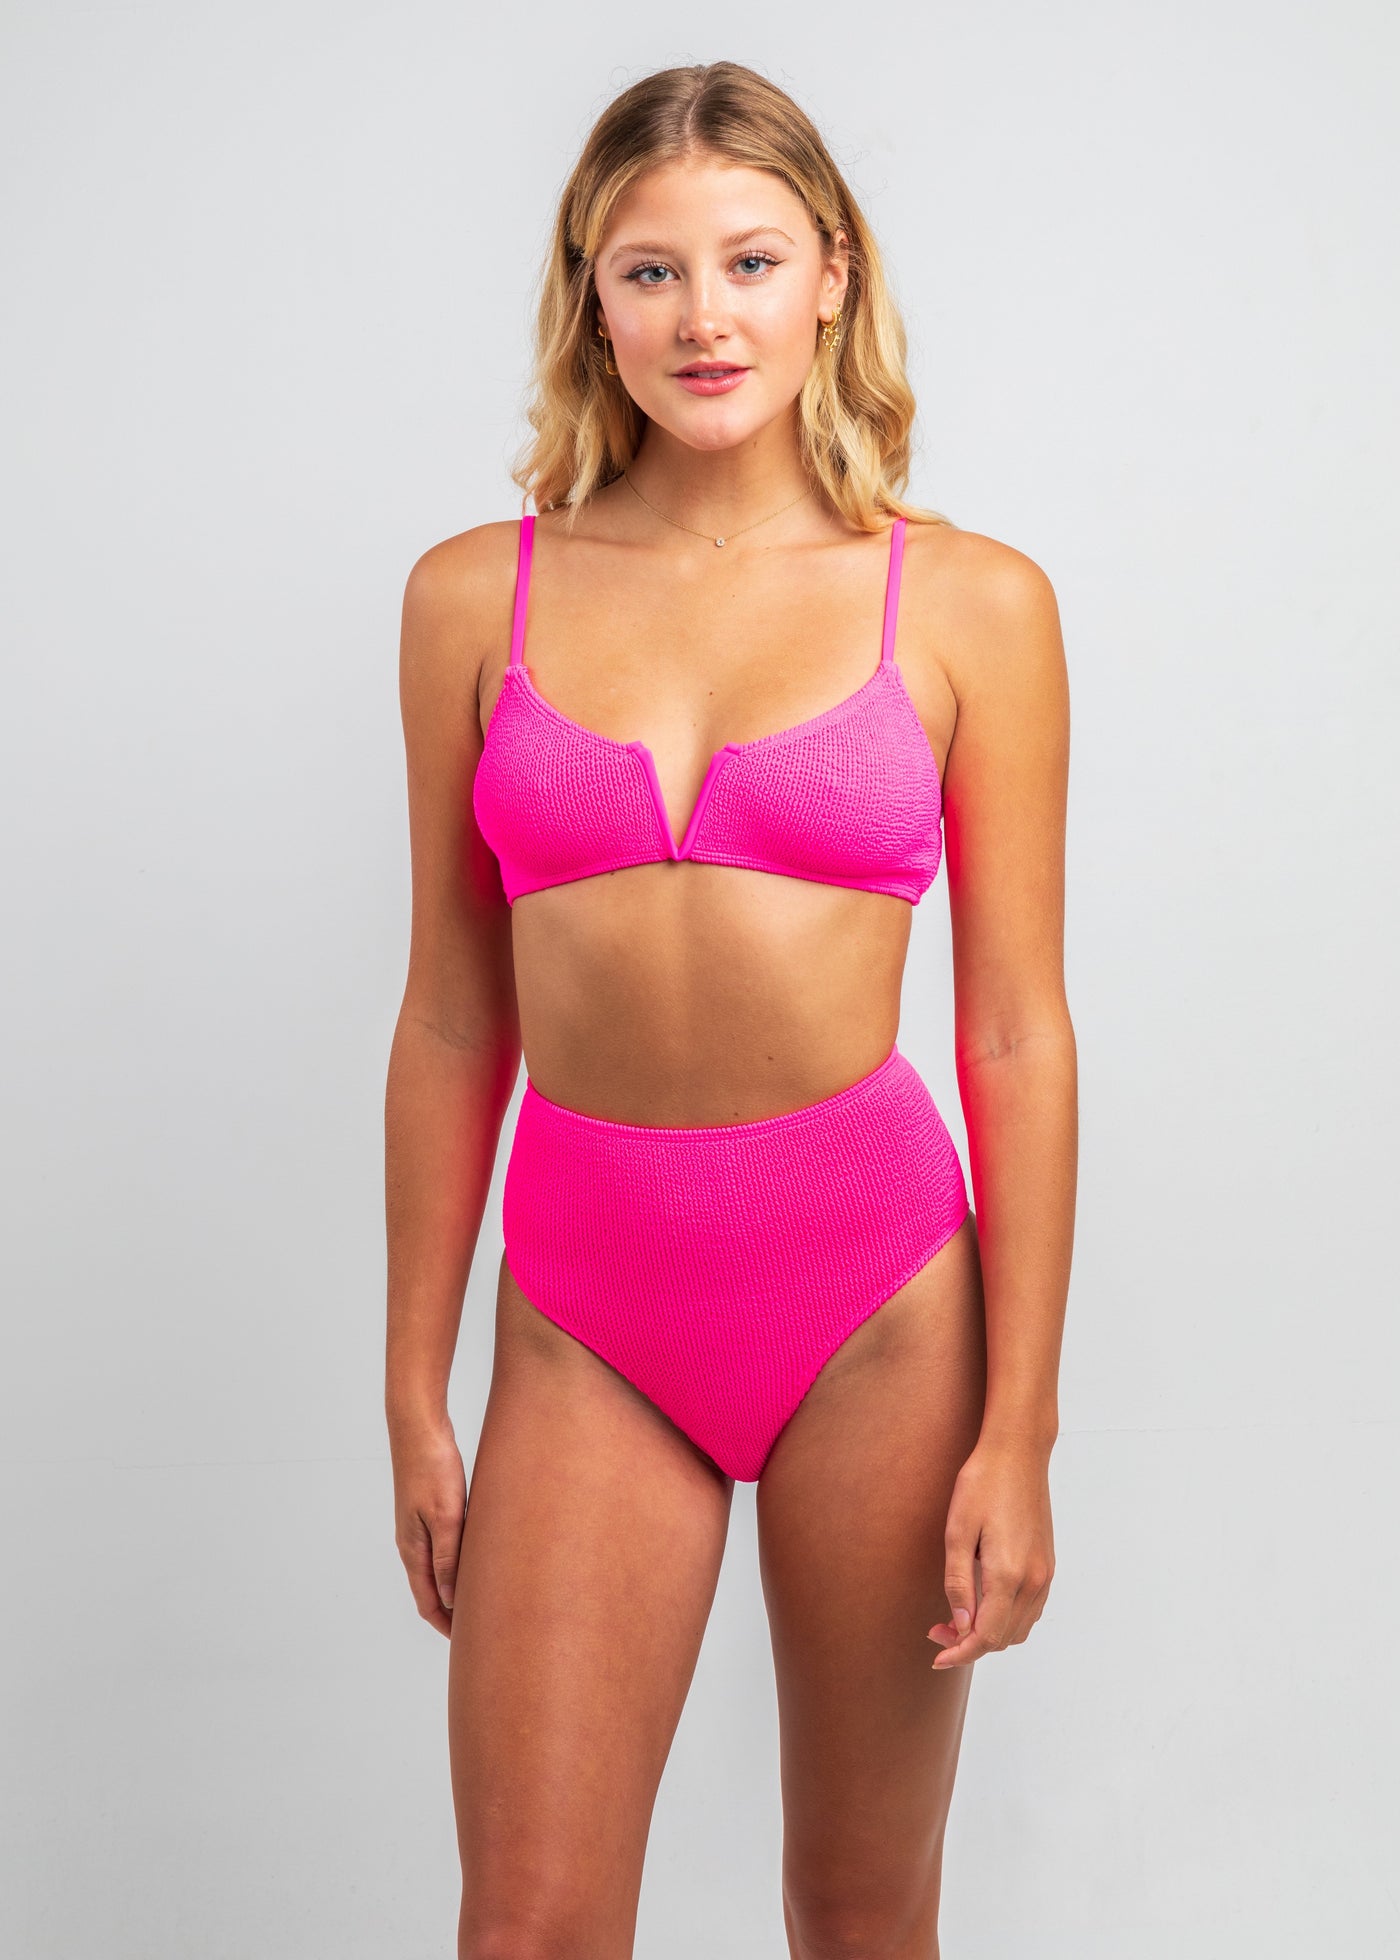 Ibiza V-Cut String Straps One Size Bikini TOP ONLY (Hot Pink)